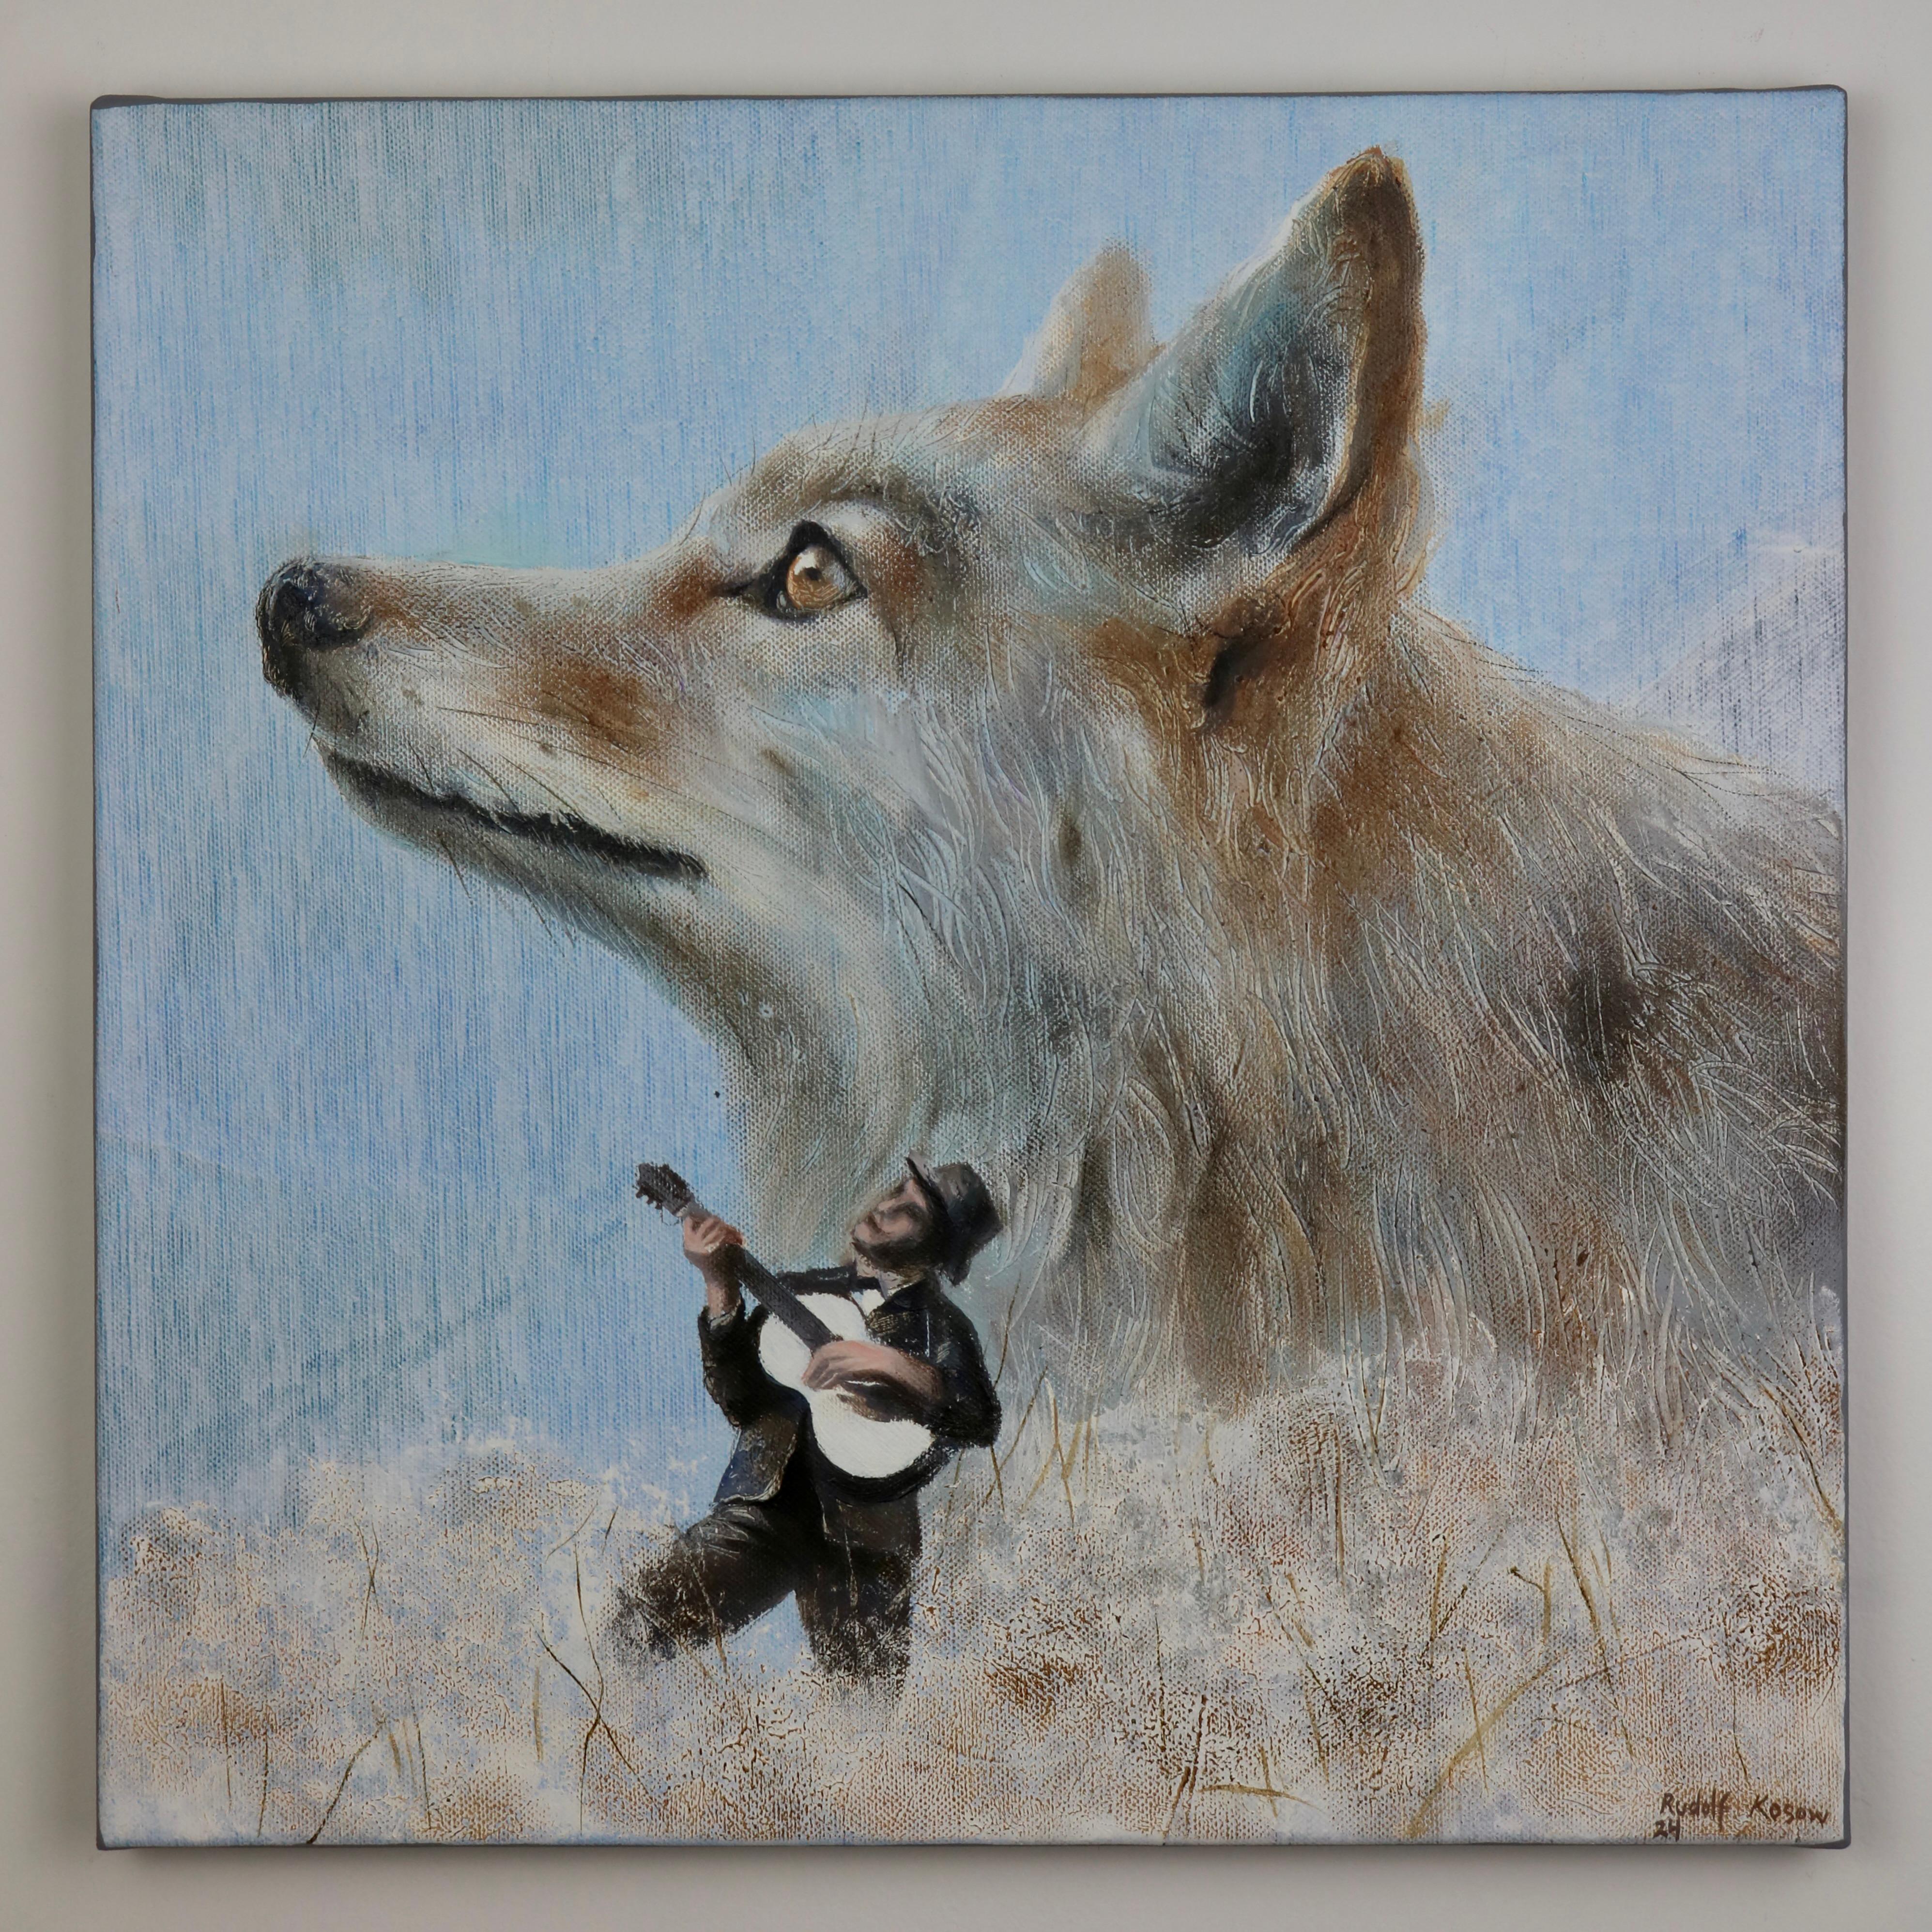 Wonderers (coyote, ukulele, man, nature, animal portrait, surrealist painting) - Surrealist Painting by Rudolf Kosow